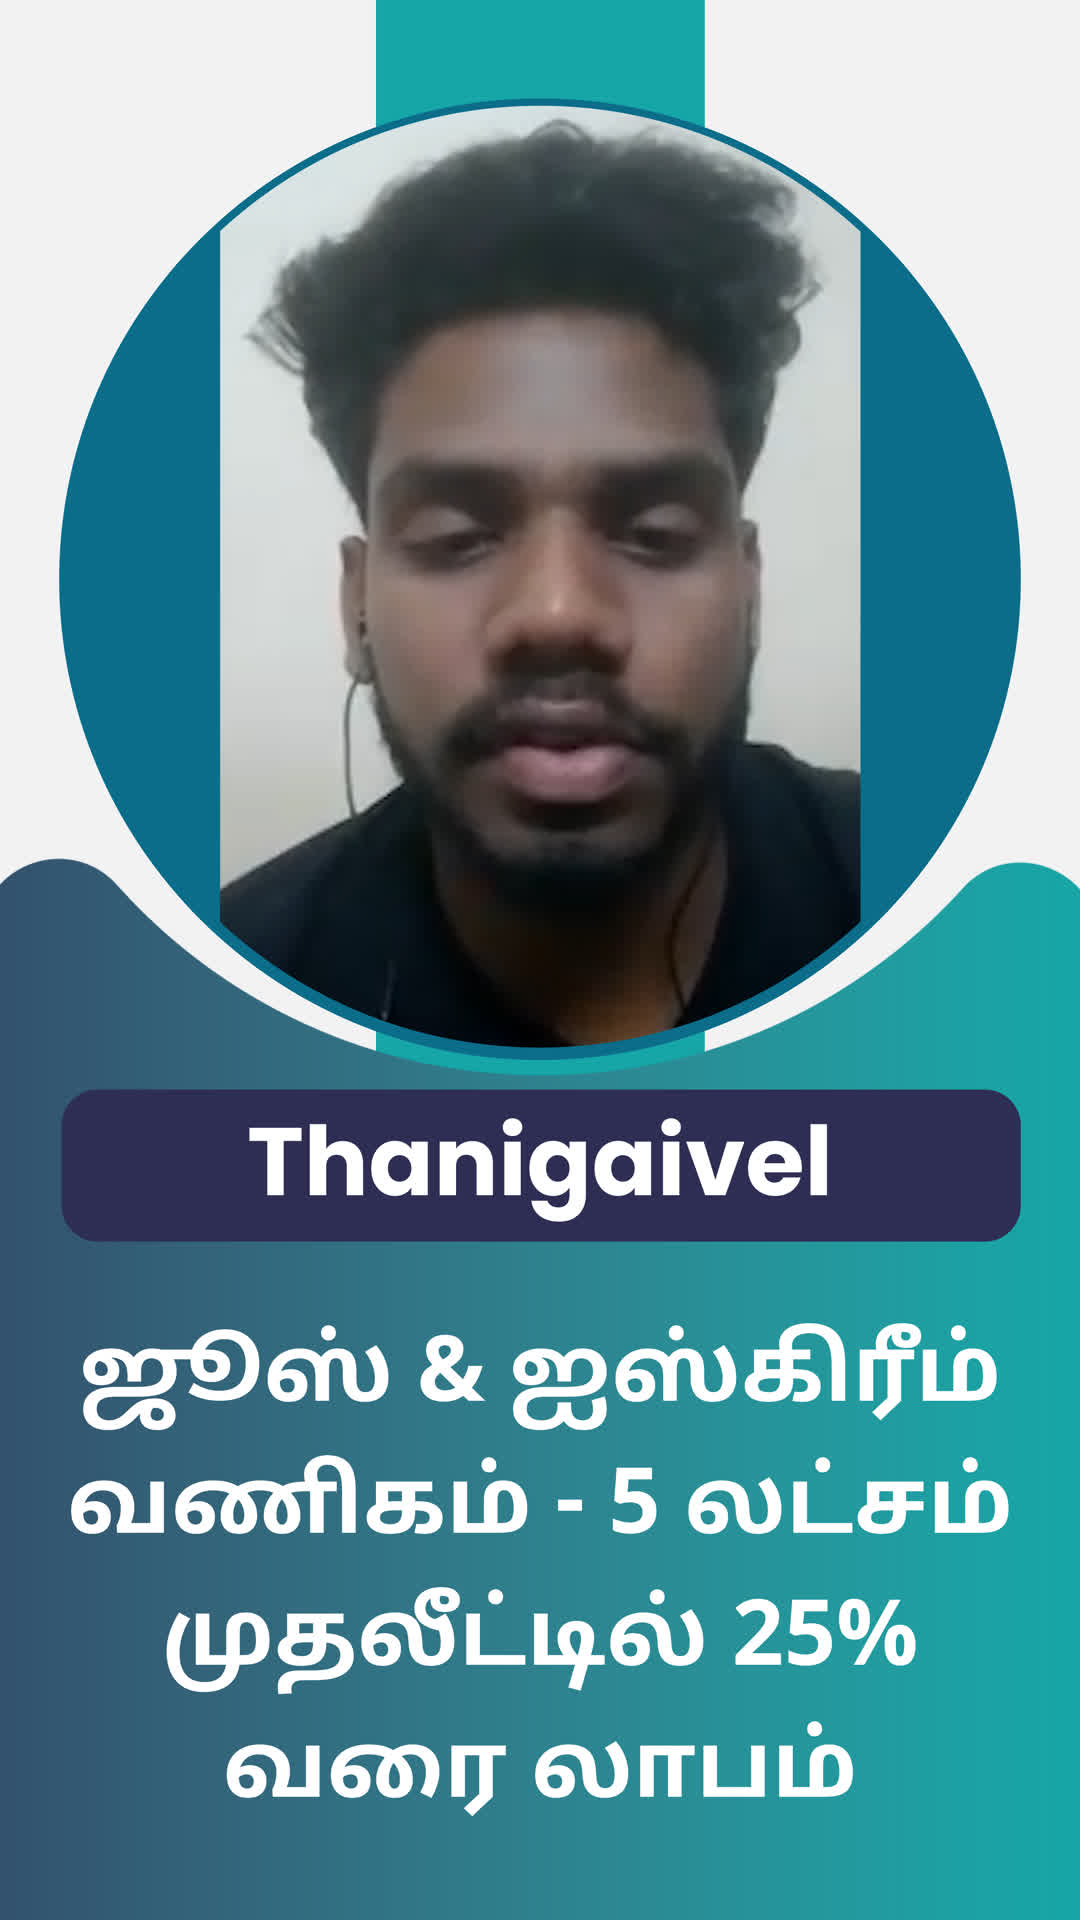 Thanigaivel.J's Honest Review of ffreedom app - Tiruvannamalai ,Tamil Nadu